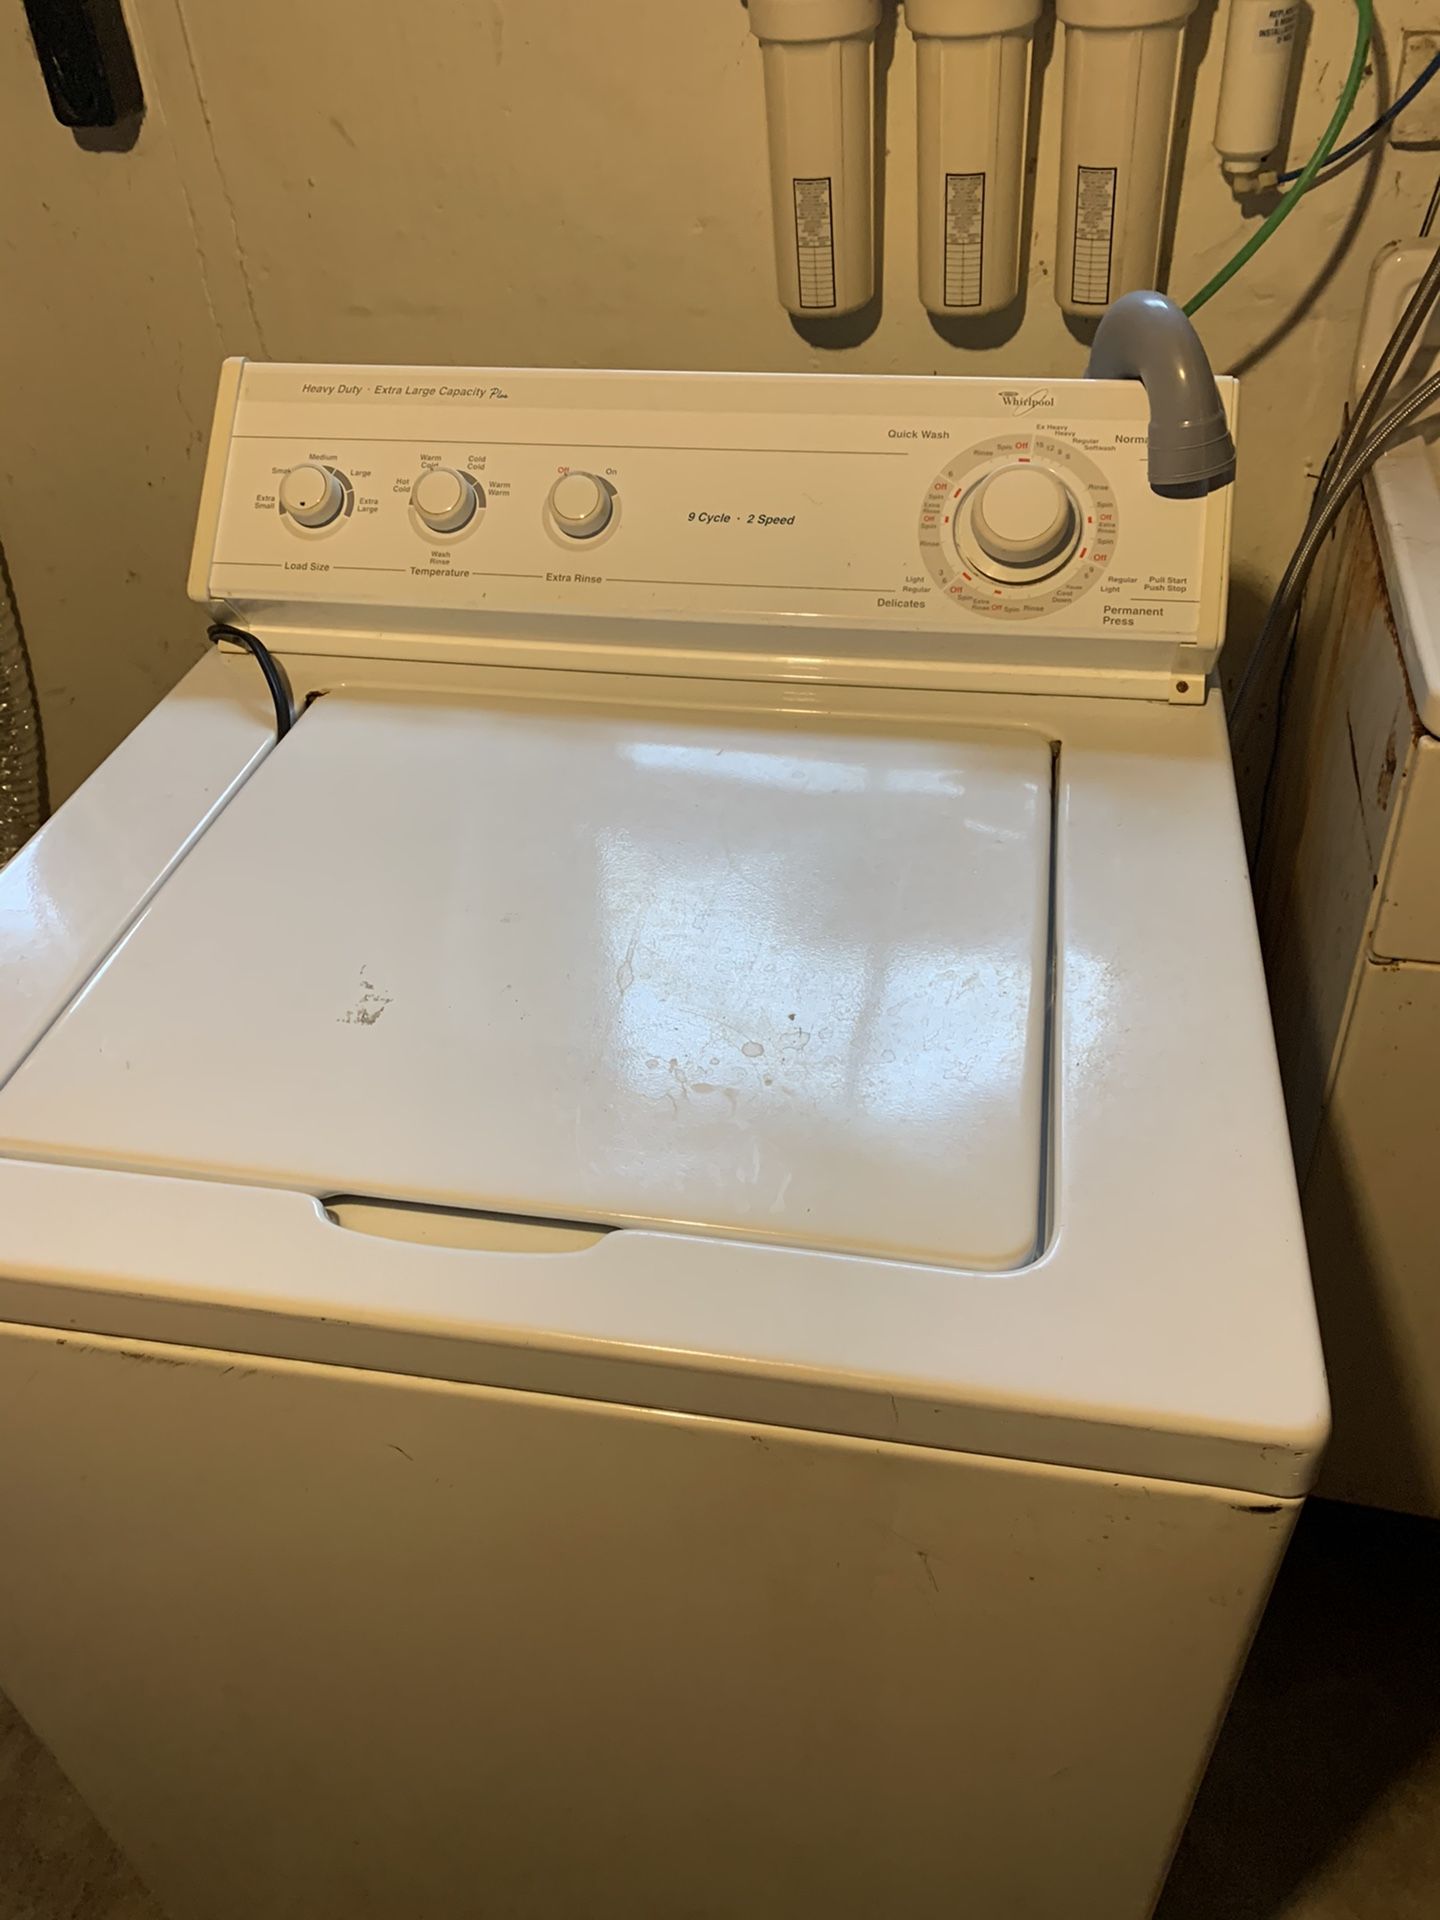 Used washer